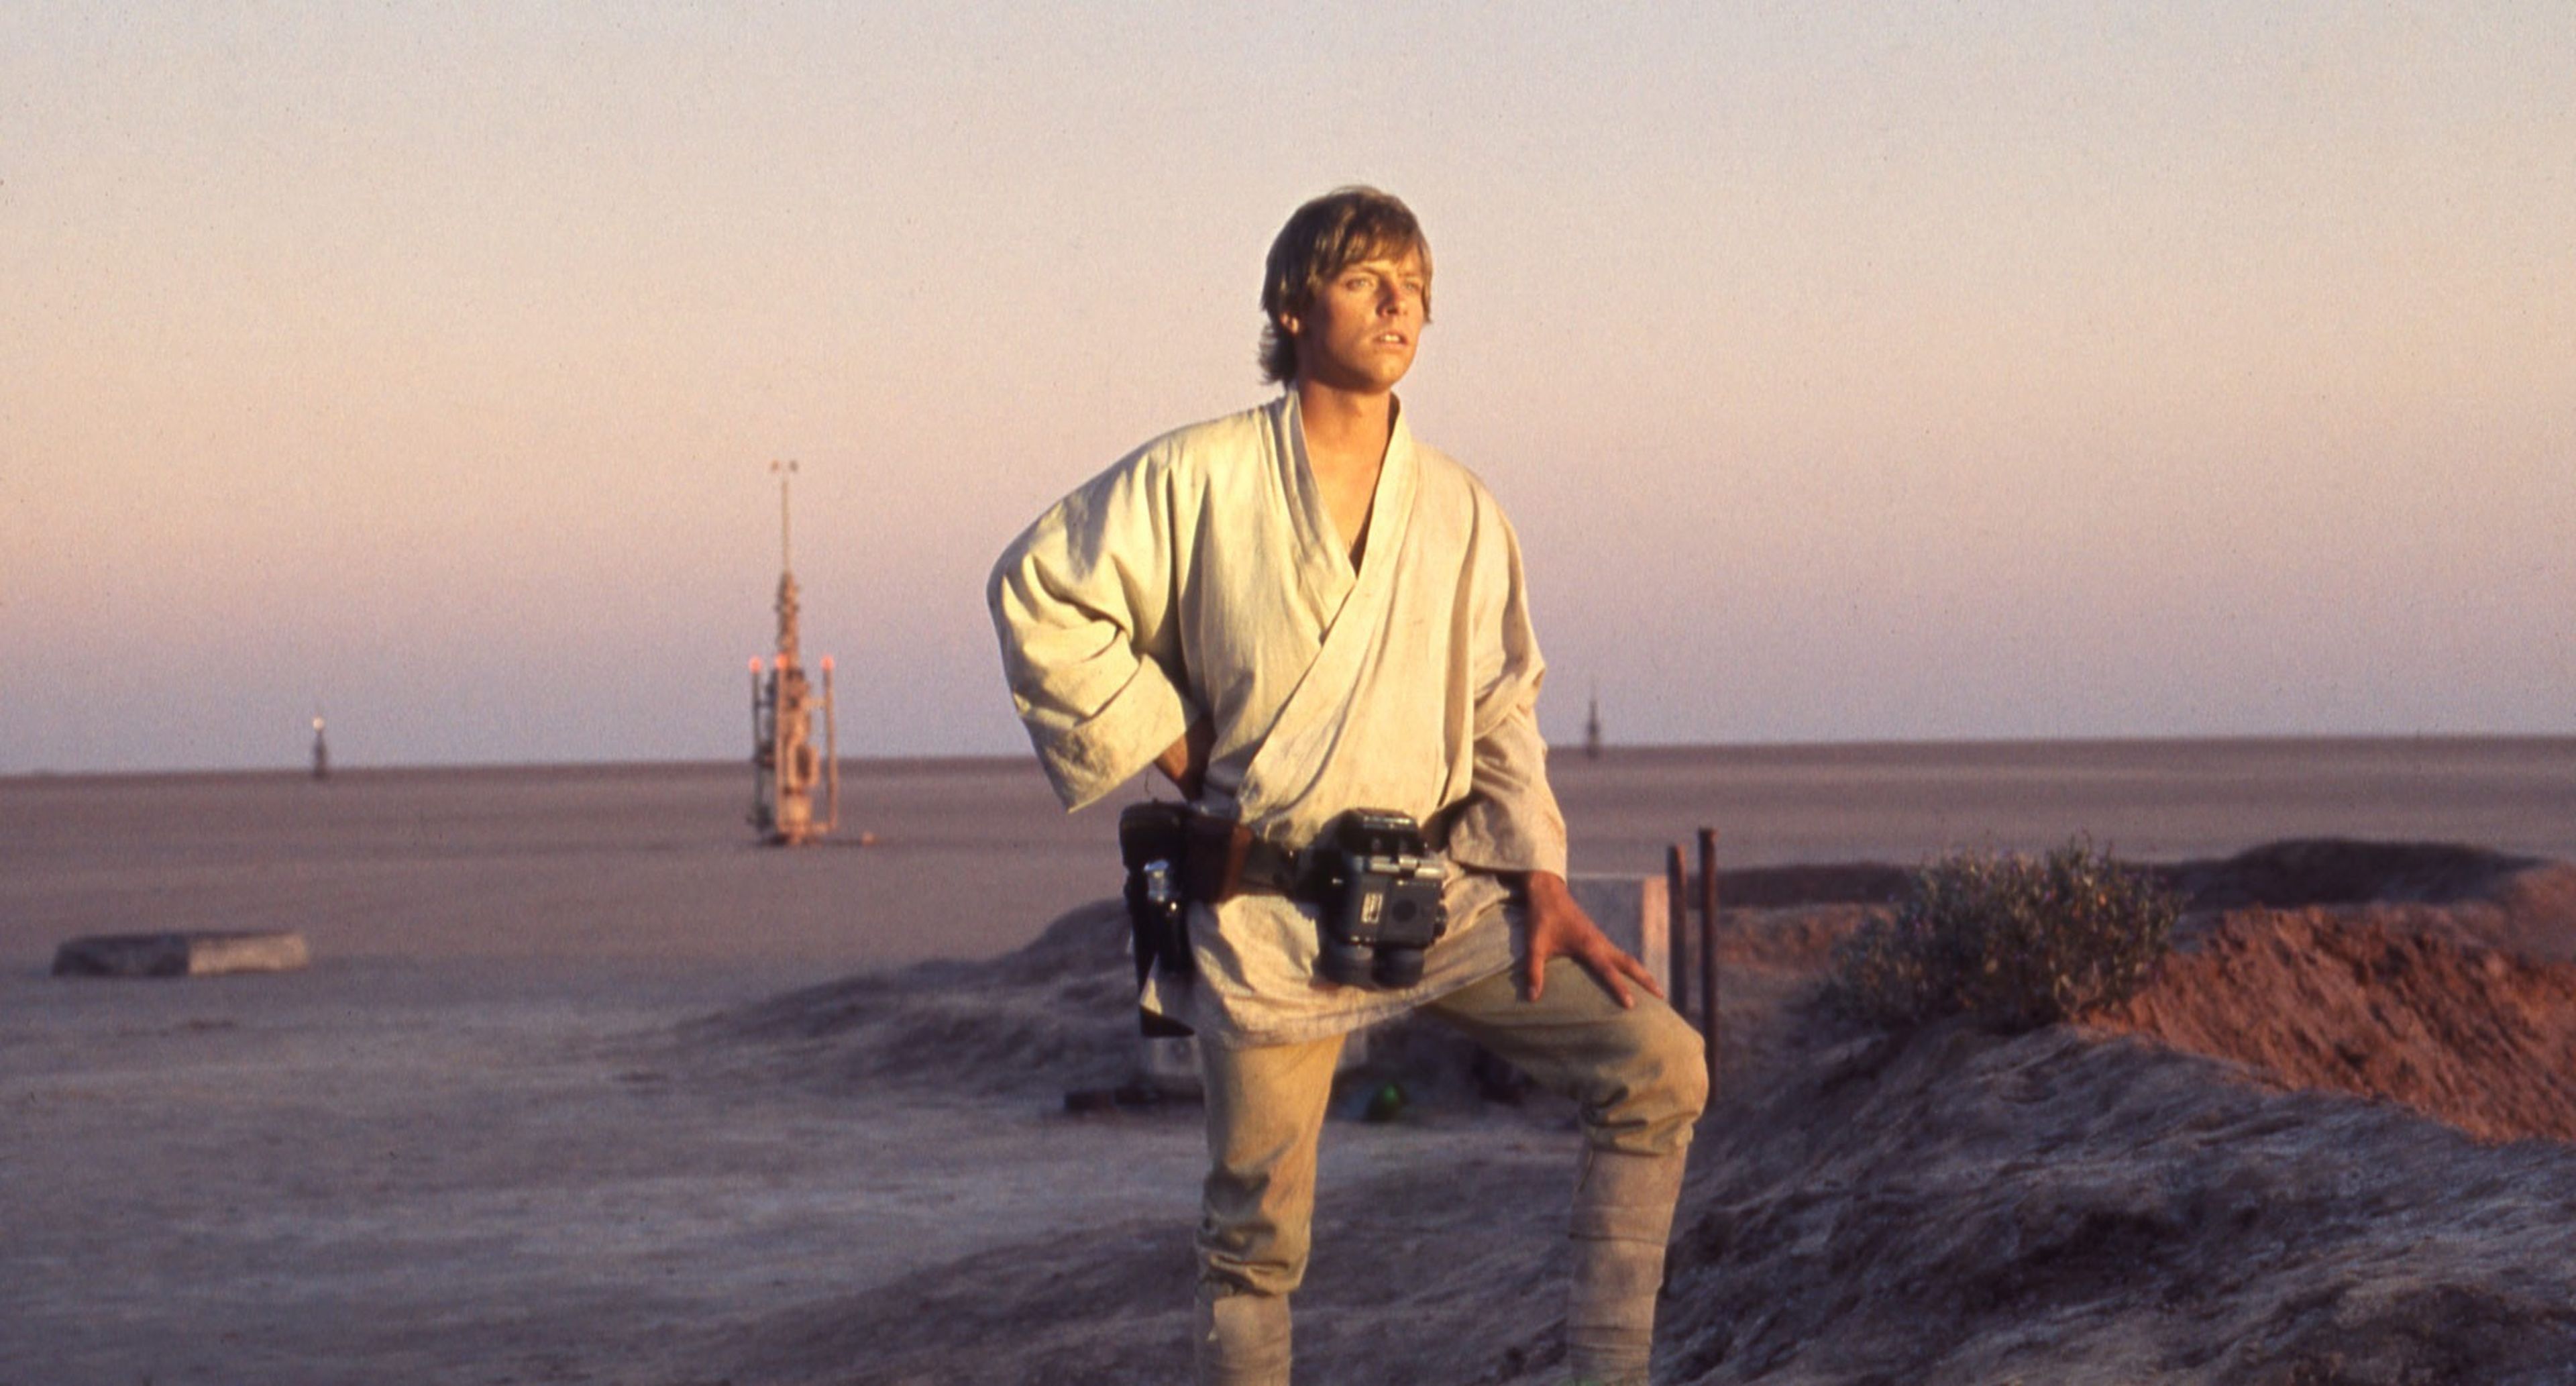 Luke Skywalker (Mark Hamill) en Star Wars: Una nueva esperanza